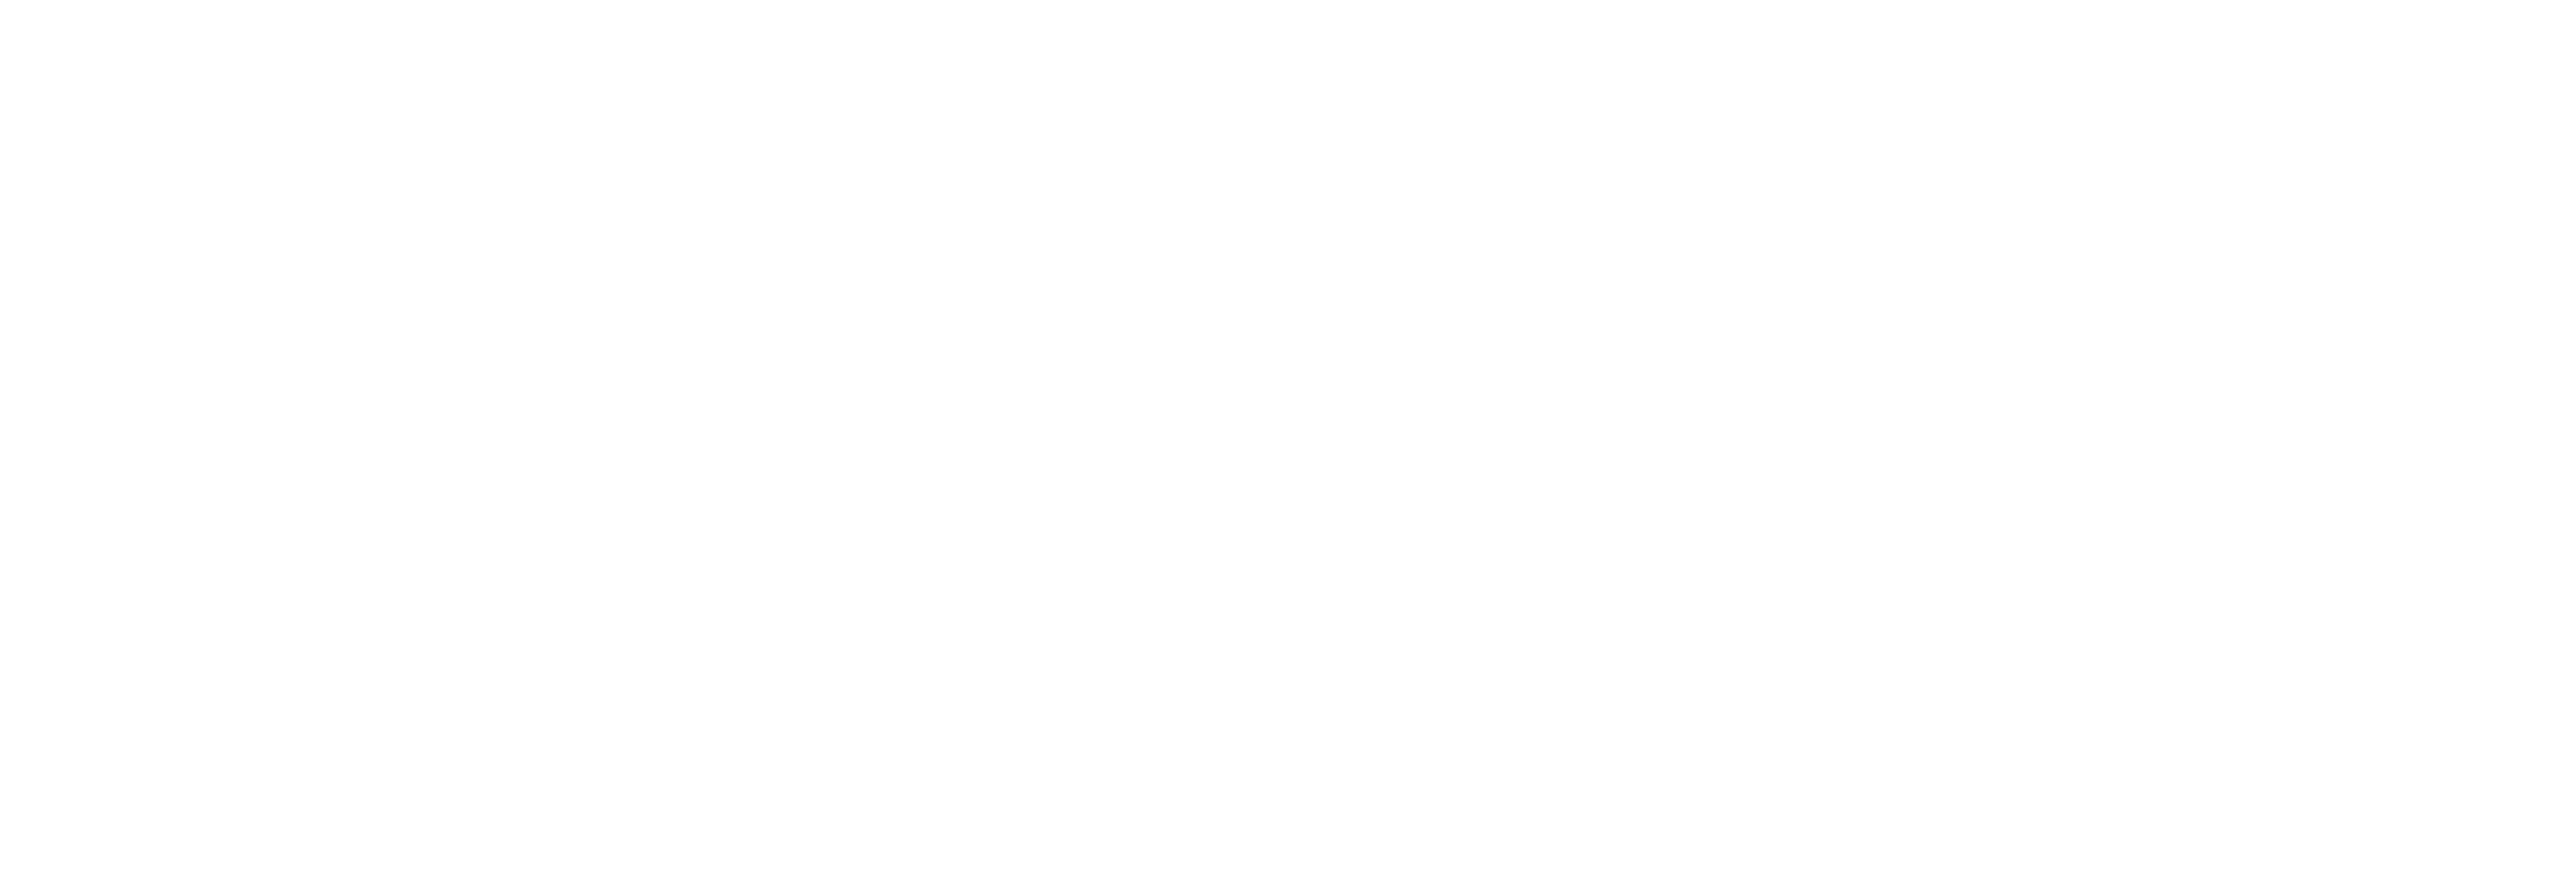 Bookie logo